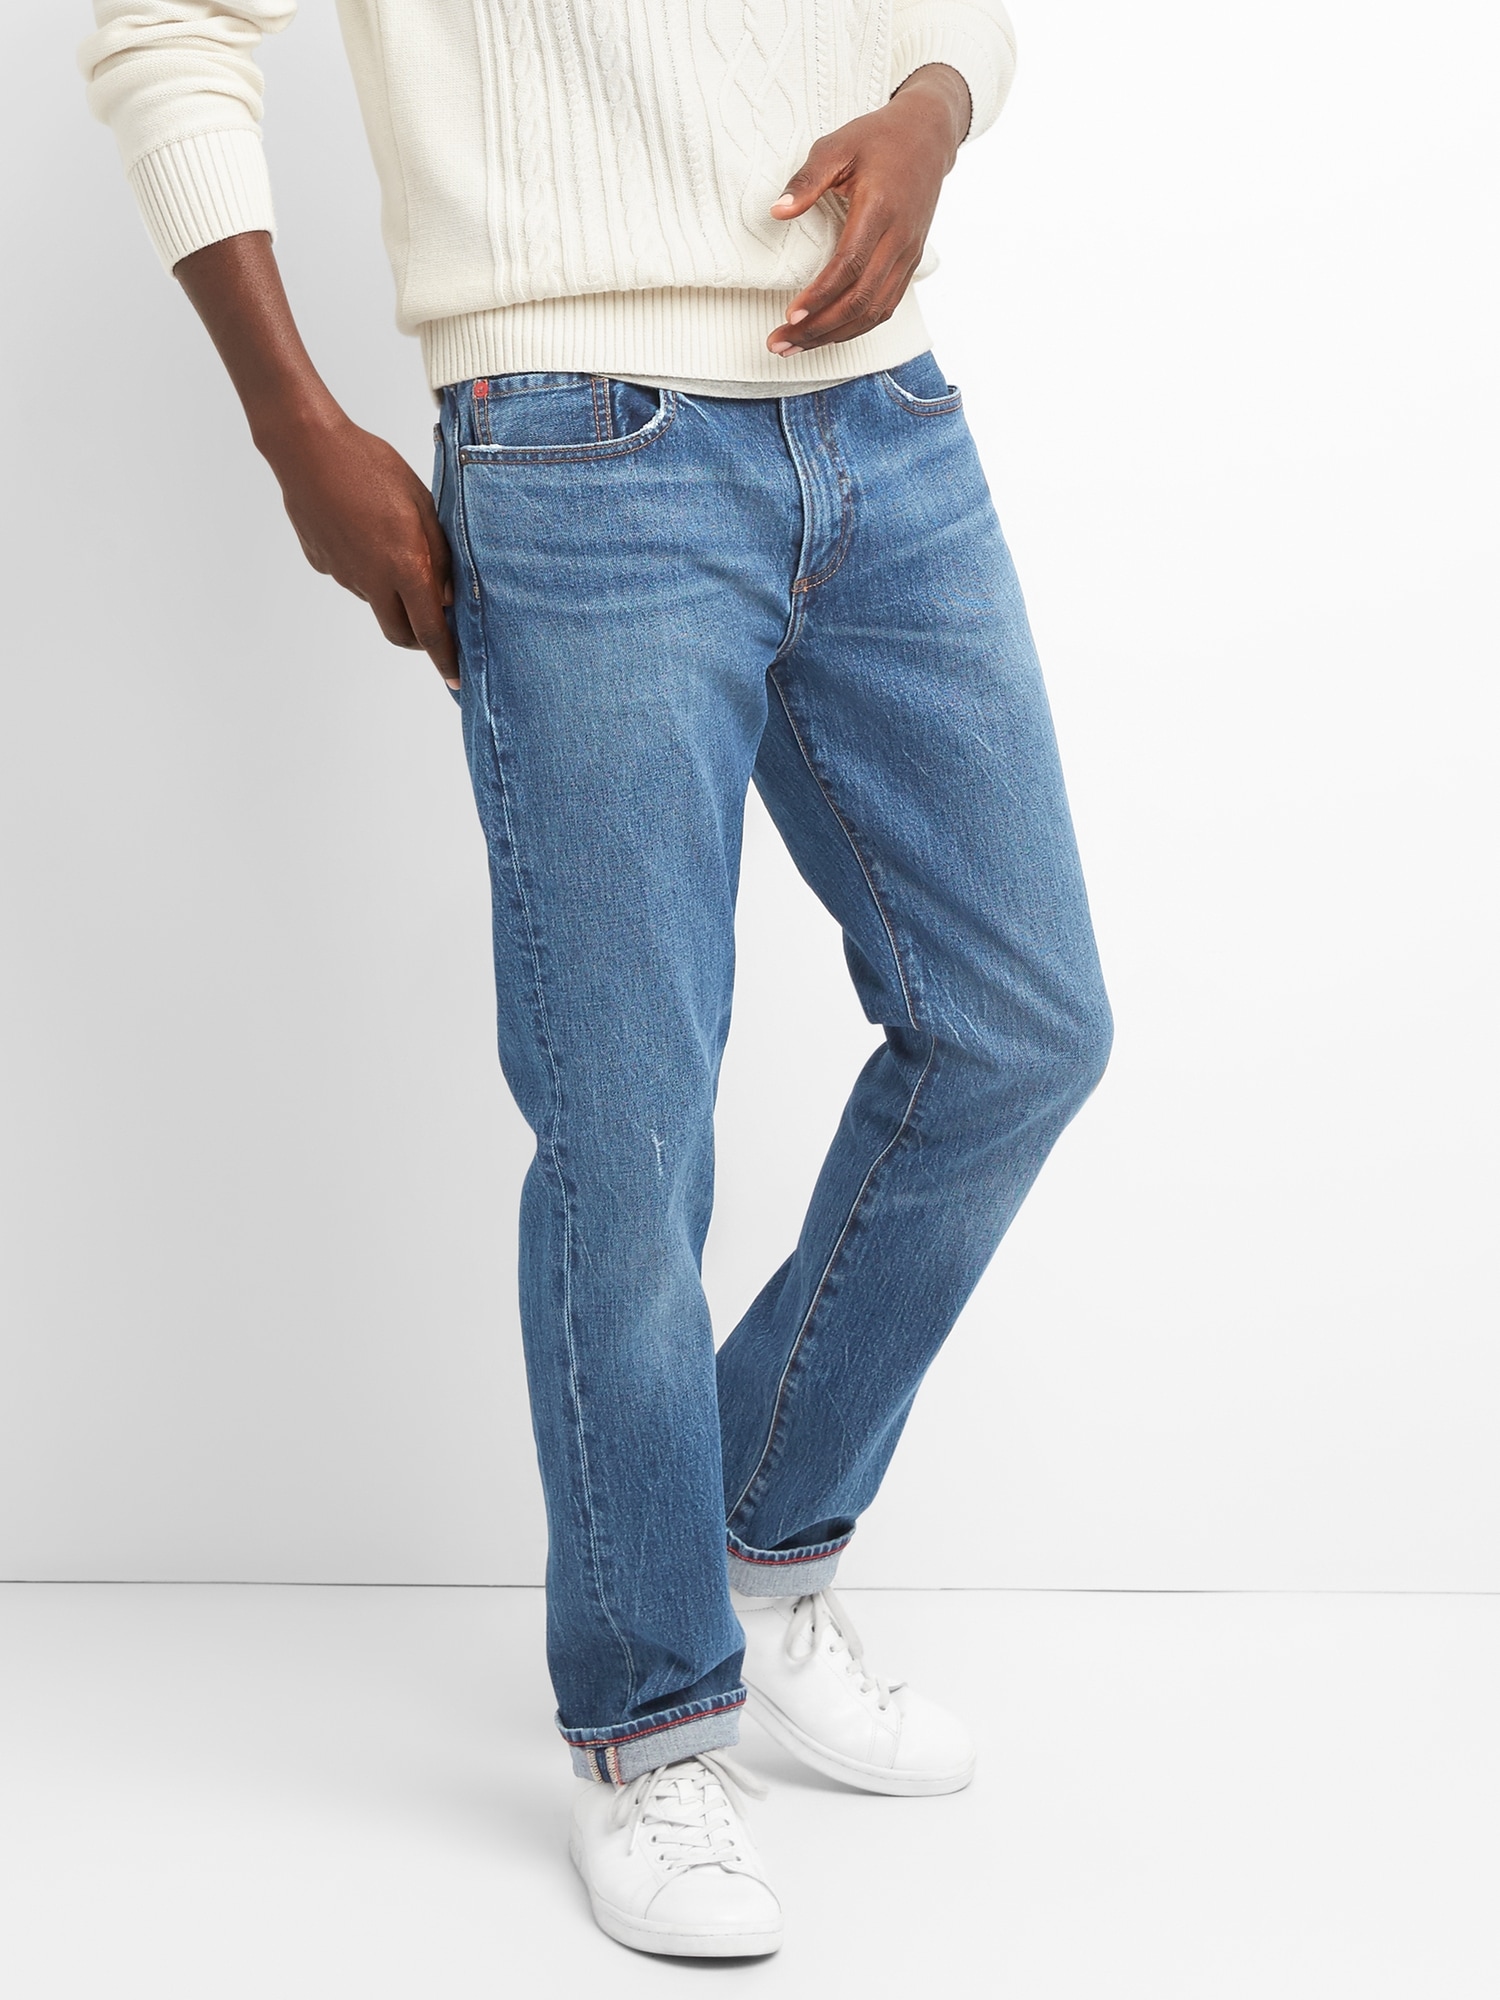 Cone Denim® Jeans in Slim Fit with GapFlex